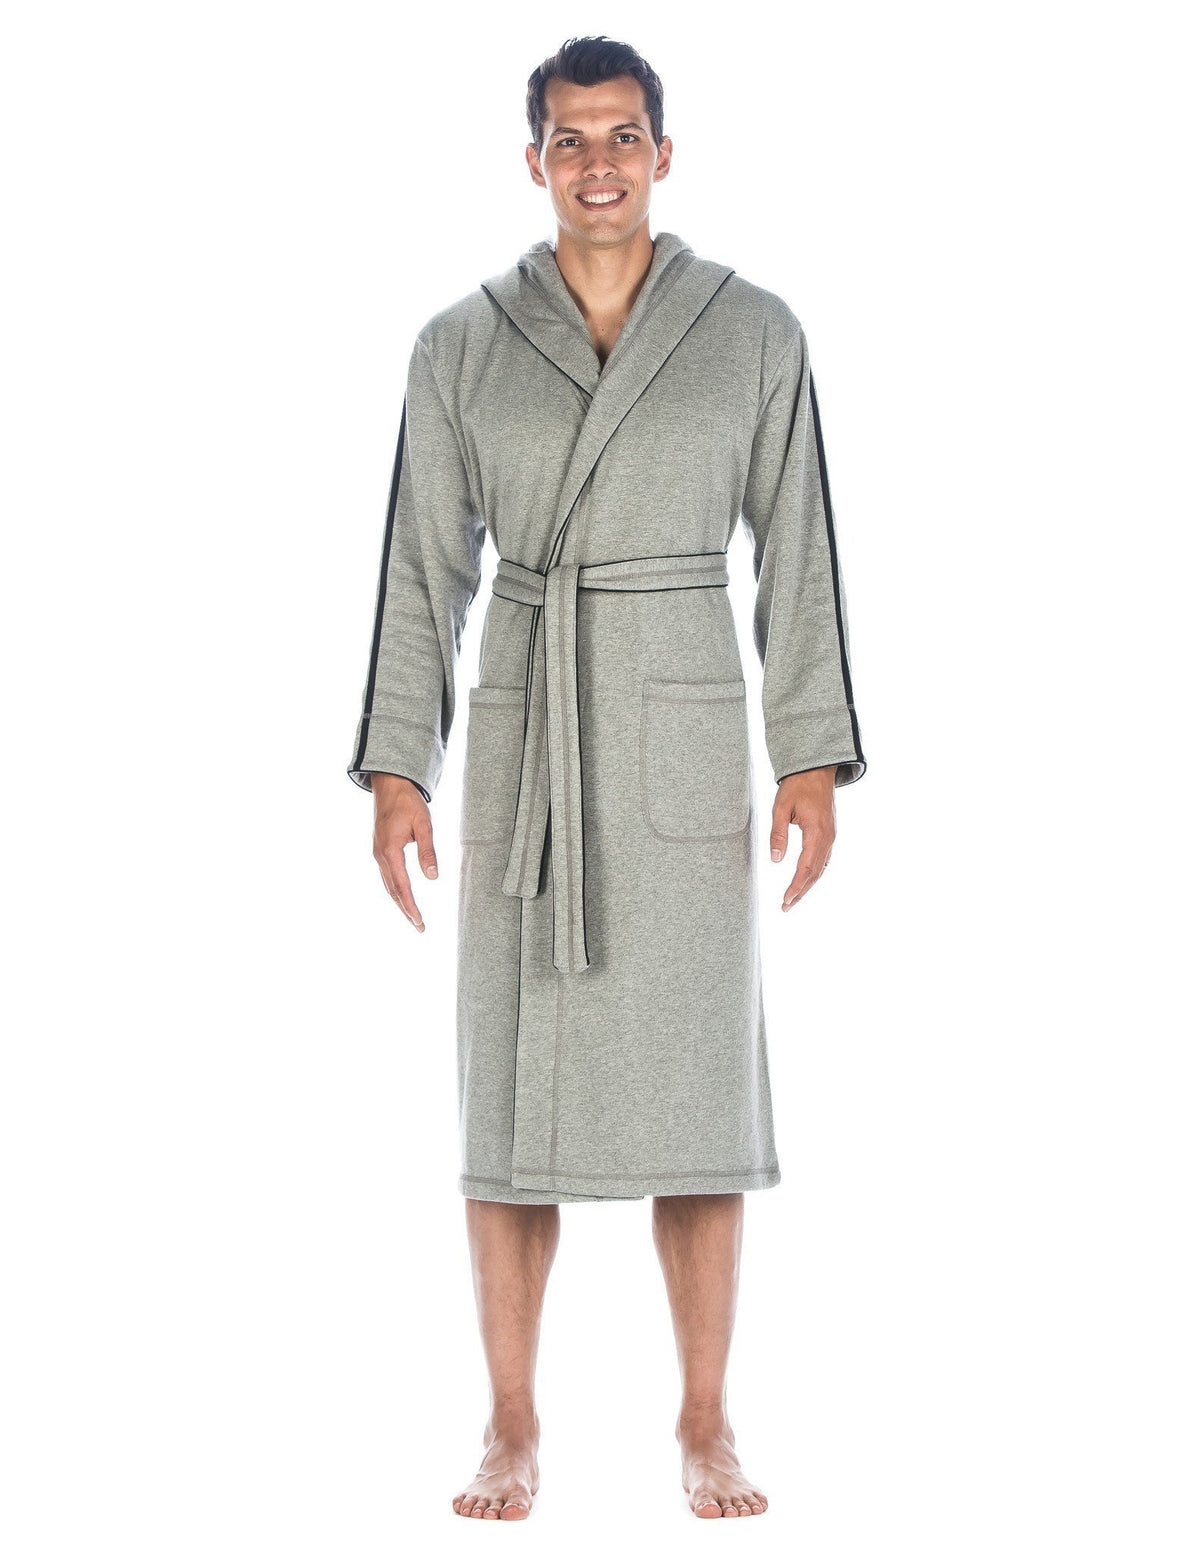 Men's Fleece Lined Hooded Robe - Heather Gray